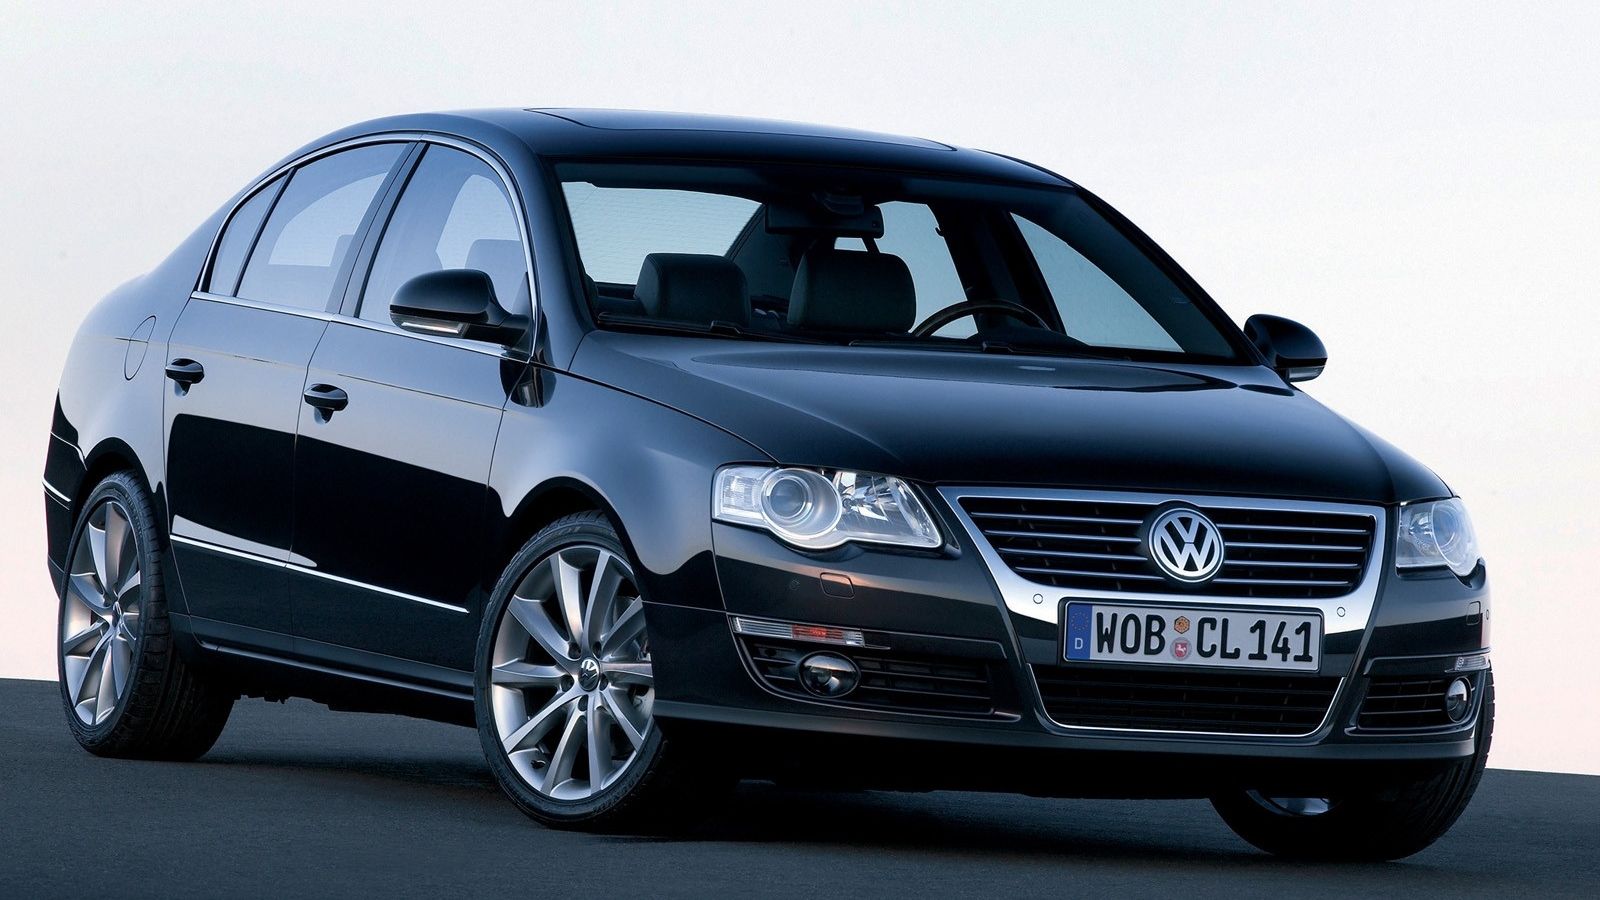 VW Passat 1.6 FSI (2005 - 2009) — G A M C O | Vw passat, Volkswagen passat,  Volkswagen